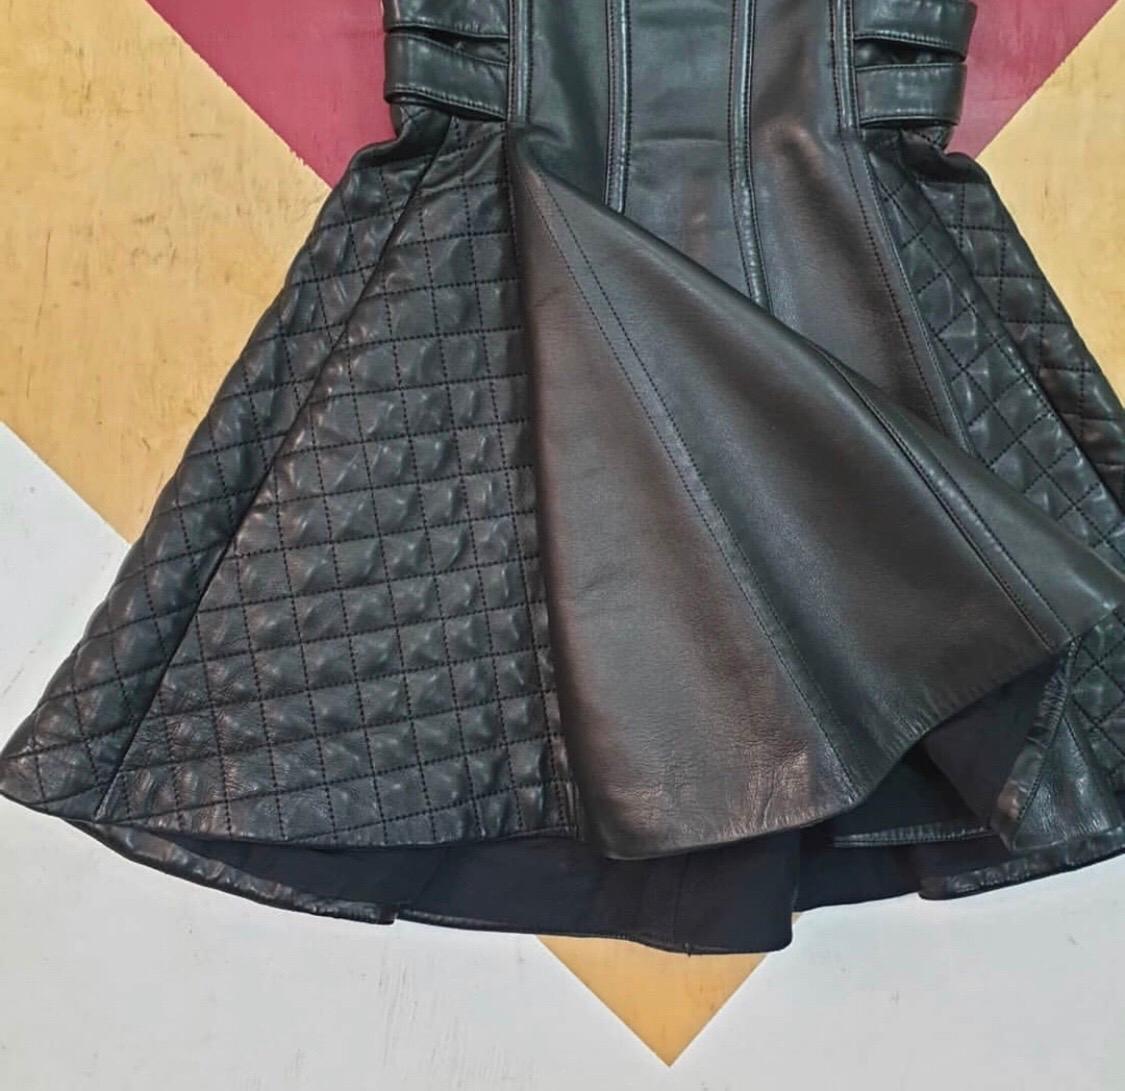 black leather corset dress